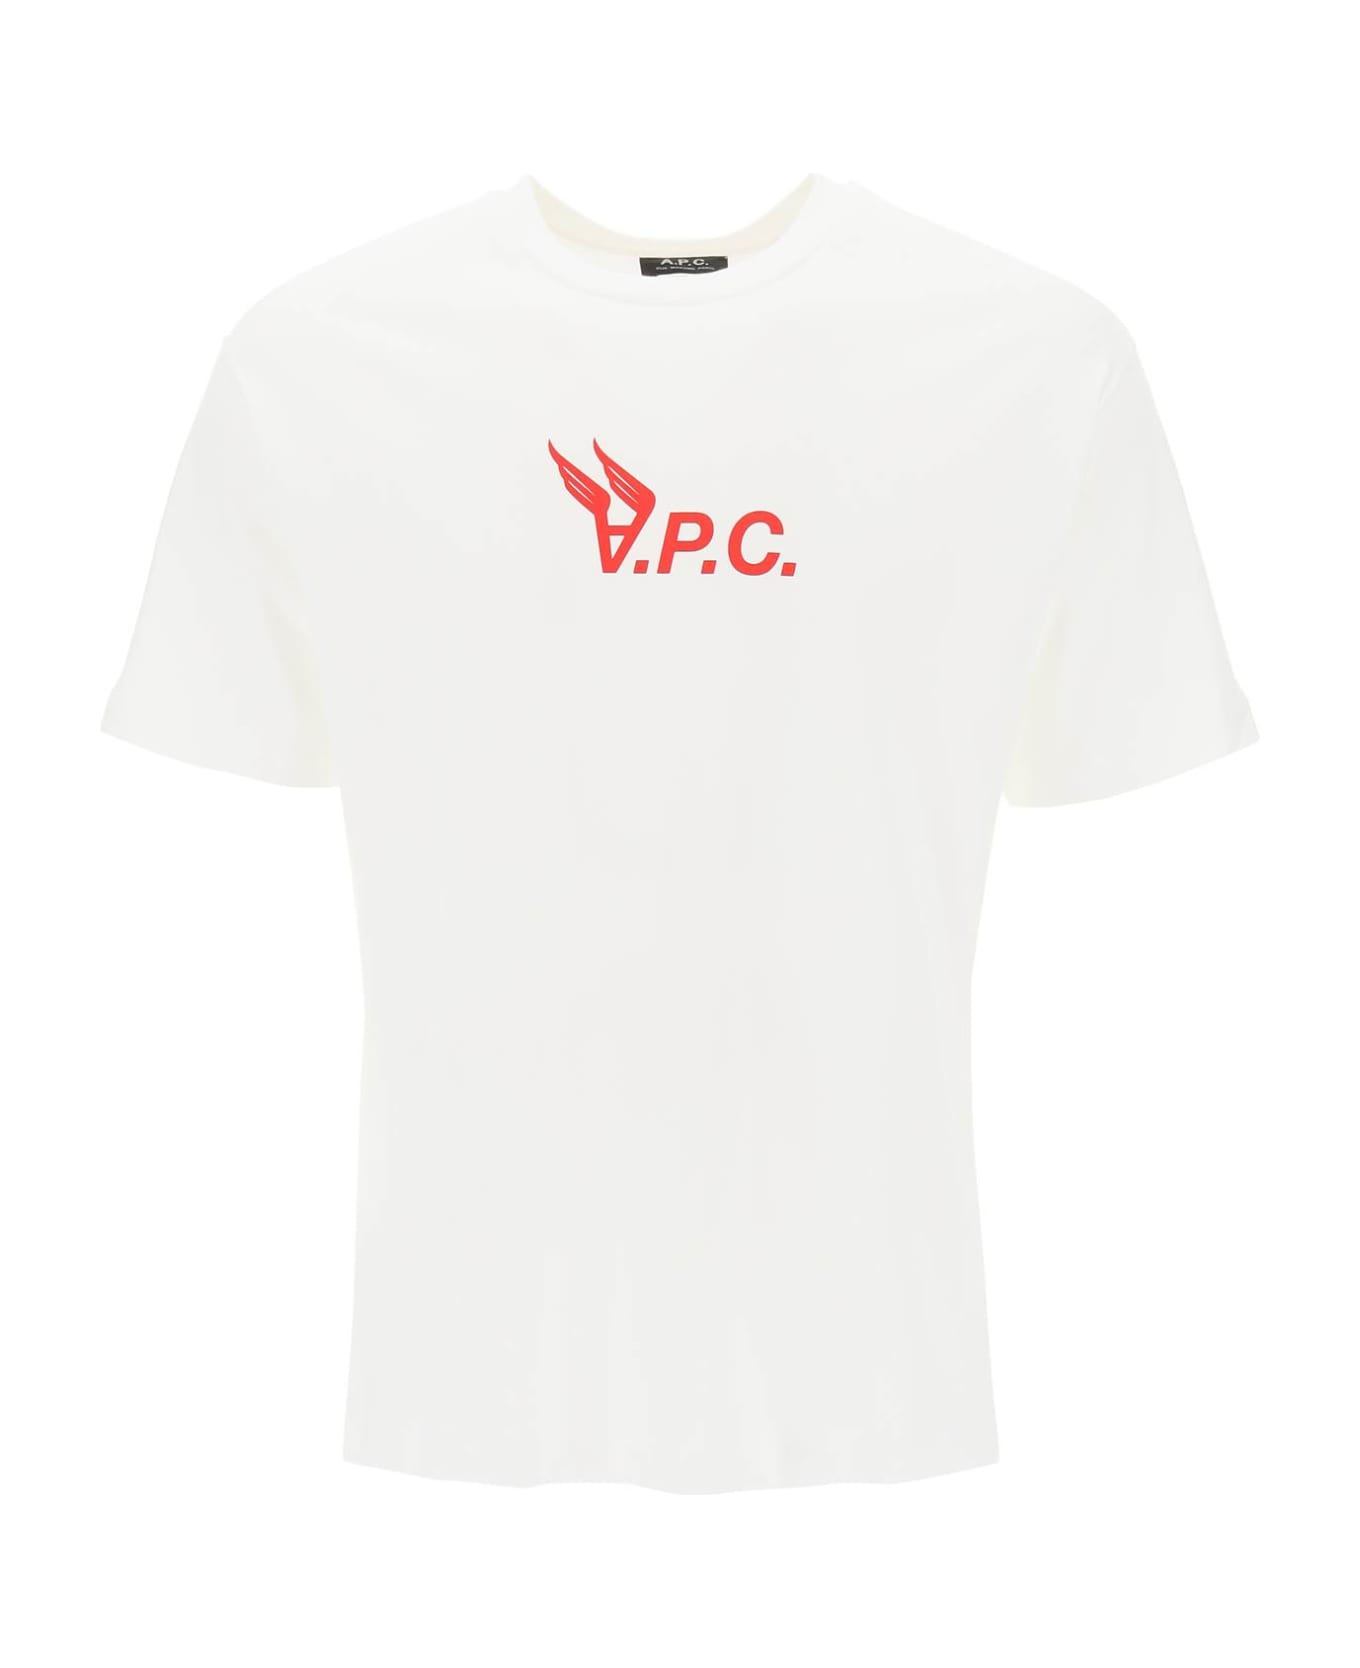 A.P.C. Hermance T-shirt - Aab White Tシャツ